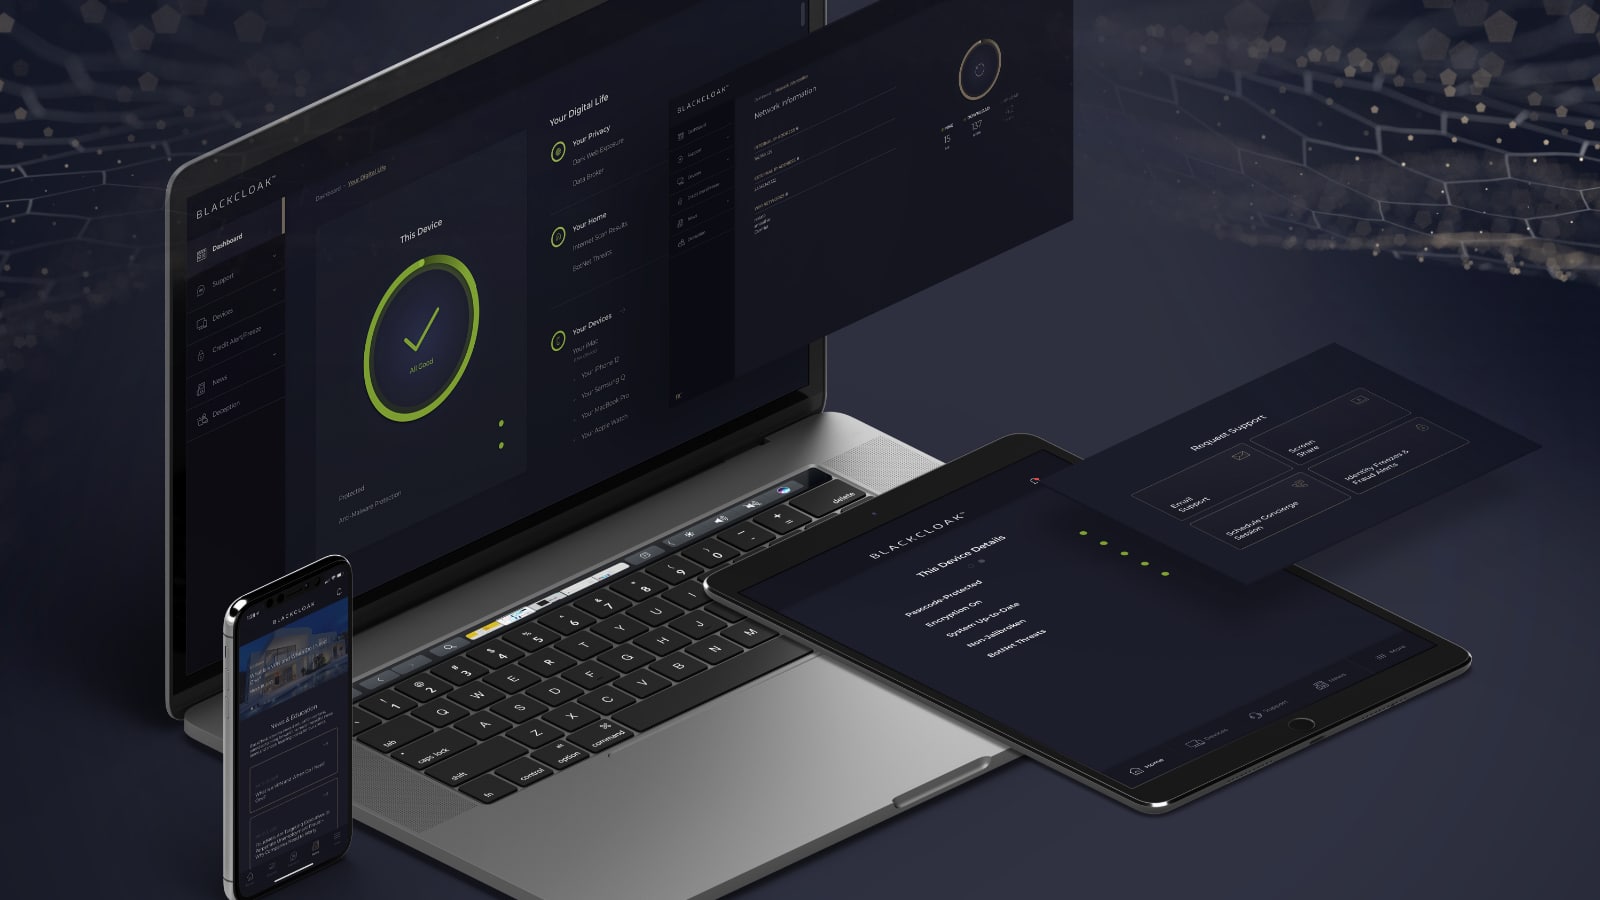 BlackCloak's personal device security platform for laptops, smartphones, tablets, and more.